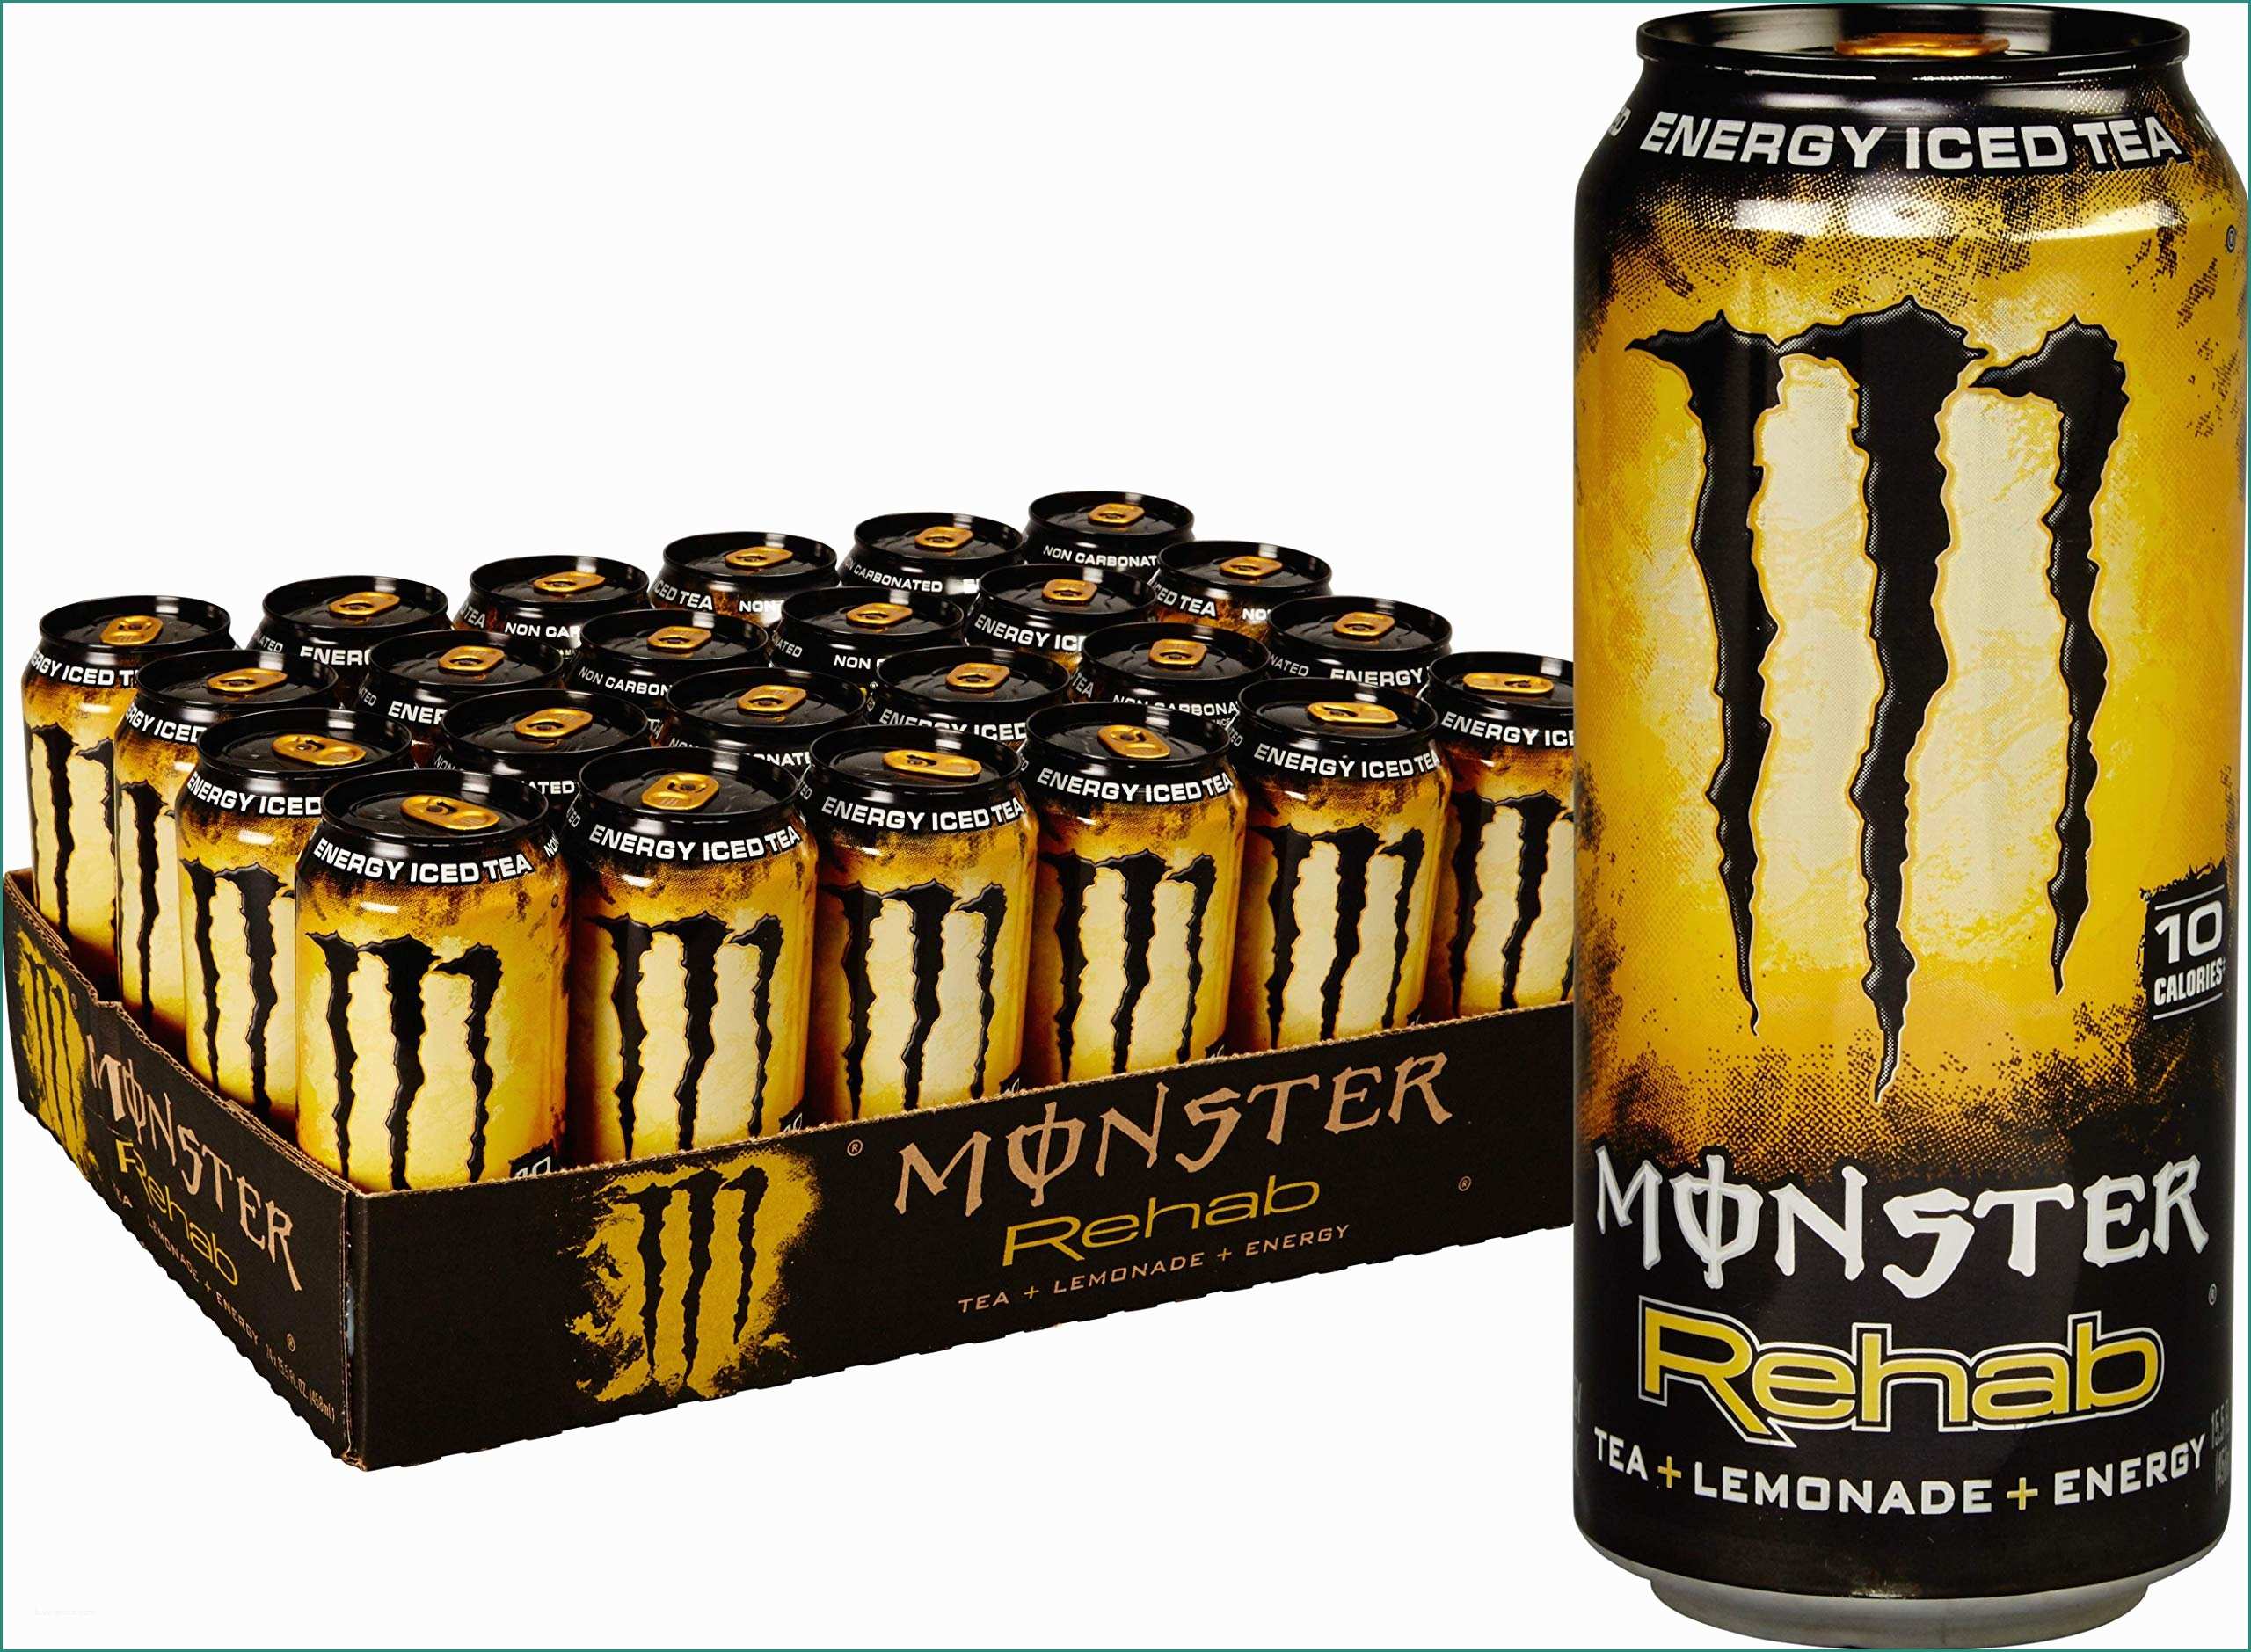 Ssml Gregorio Vii E Amazon Monster Rehab Tea Lemonade Energy Energy Iced Tea